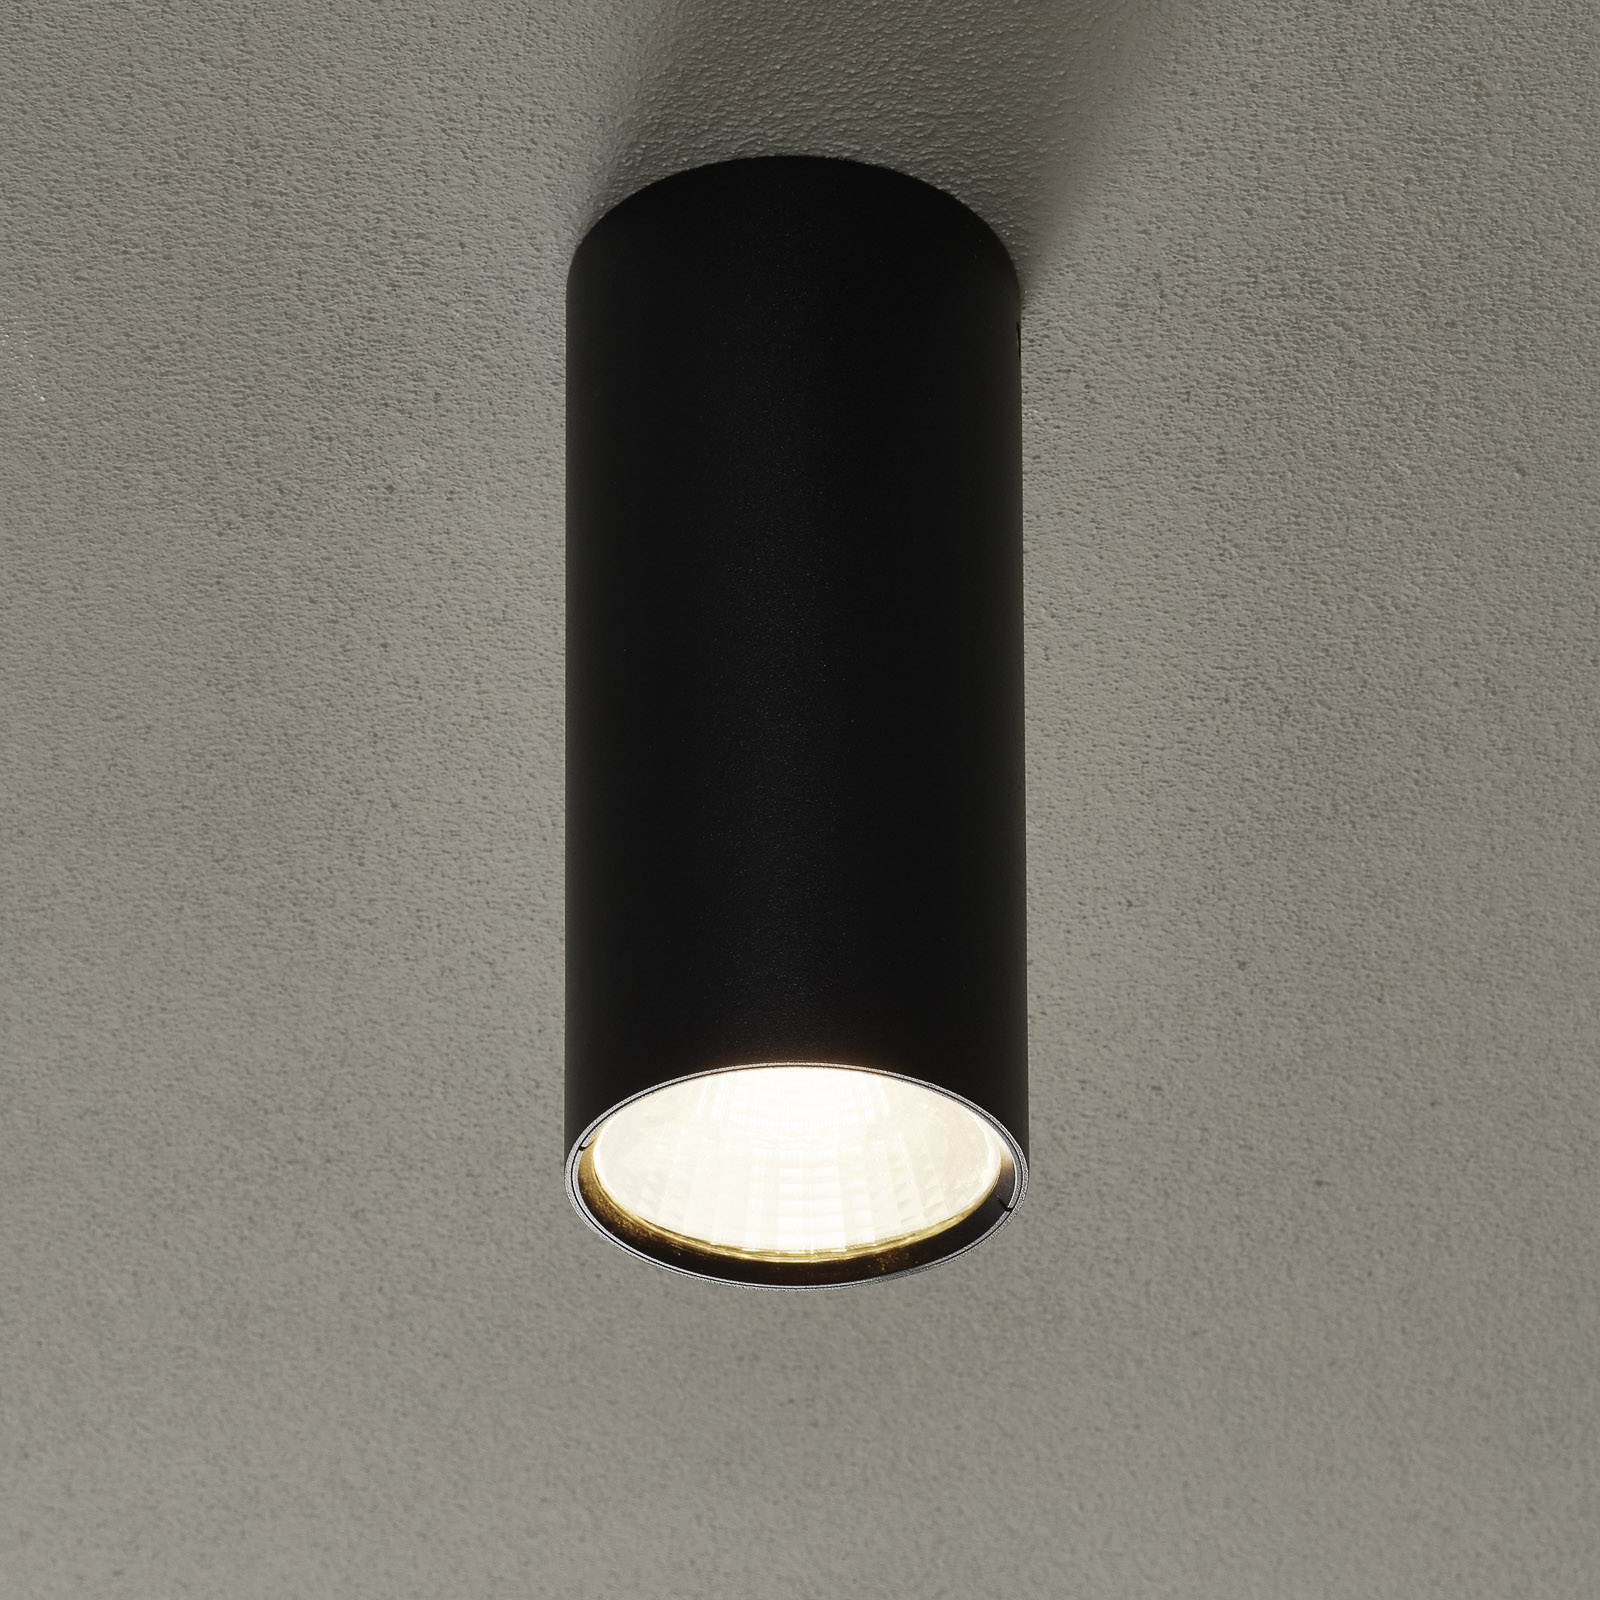 Lucande Takio LED-downlight 2 700 K Ø 10 cm svart